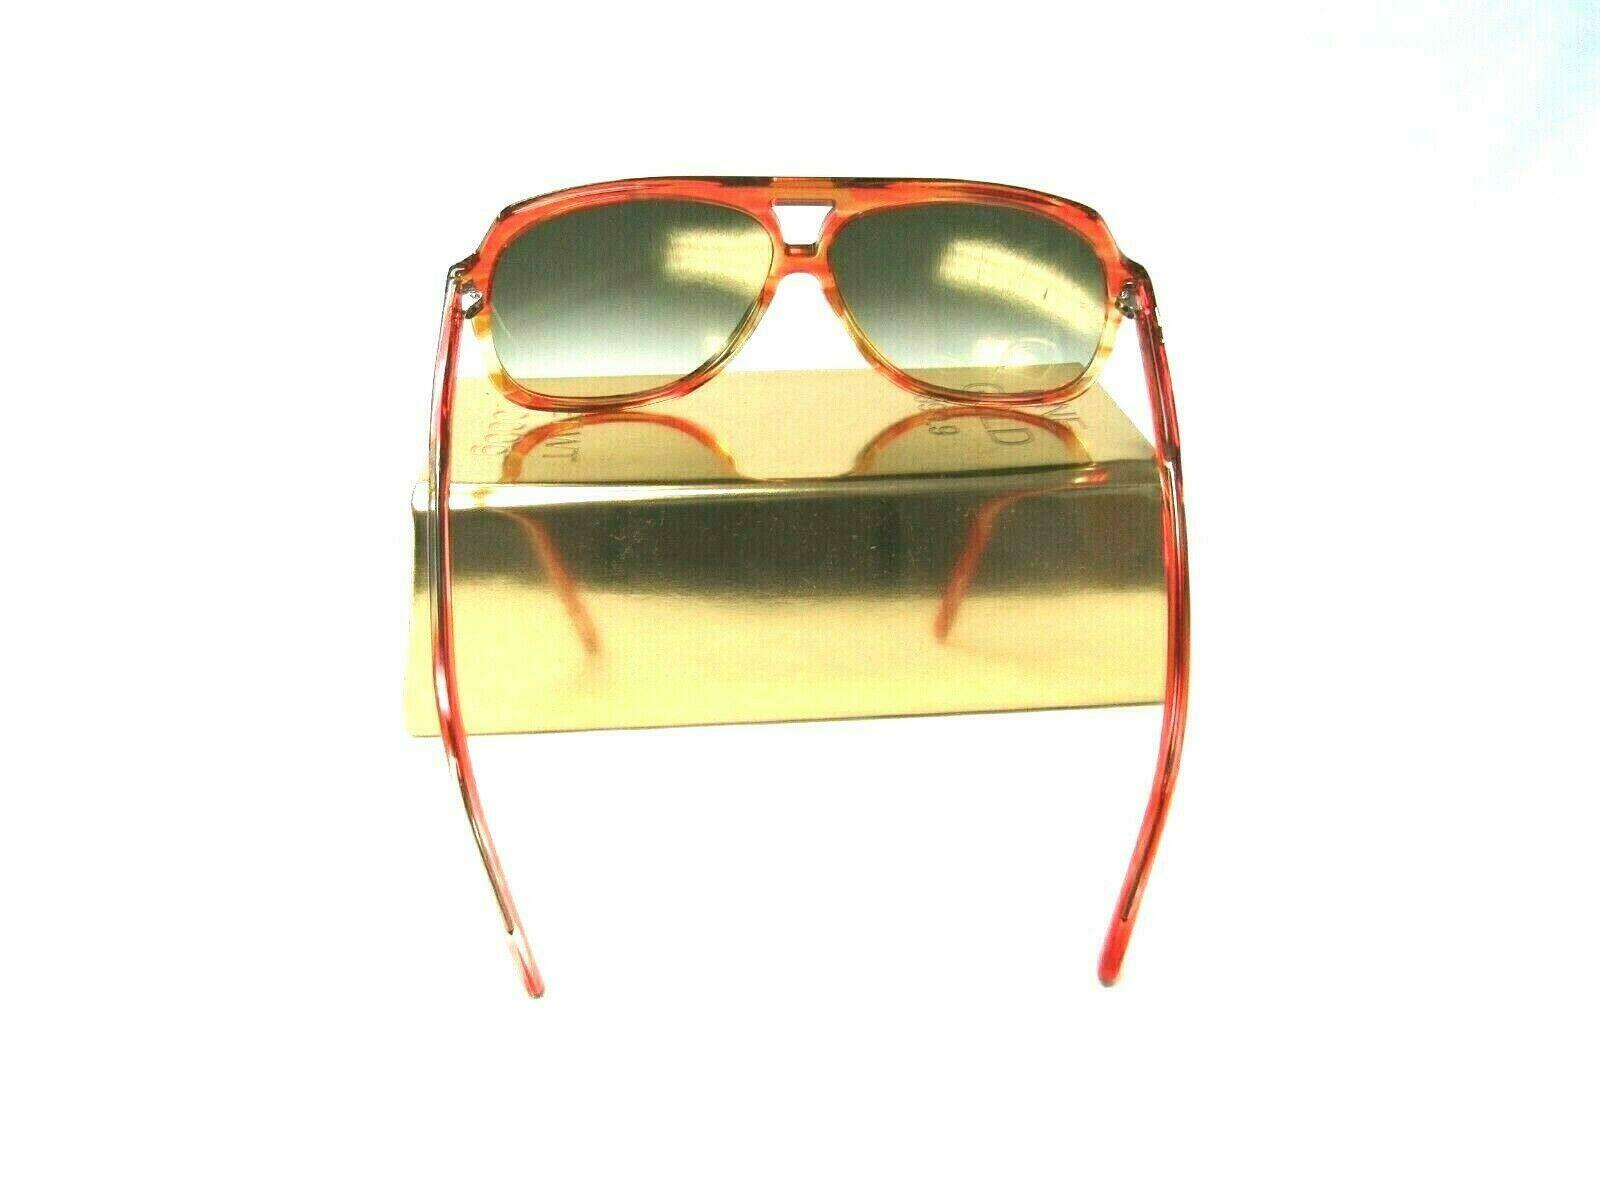 Vintage Frames By Corey Shapiro Women's Fashion Sunglasses Cherry Red - image 5 of 6